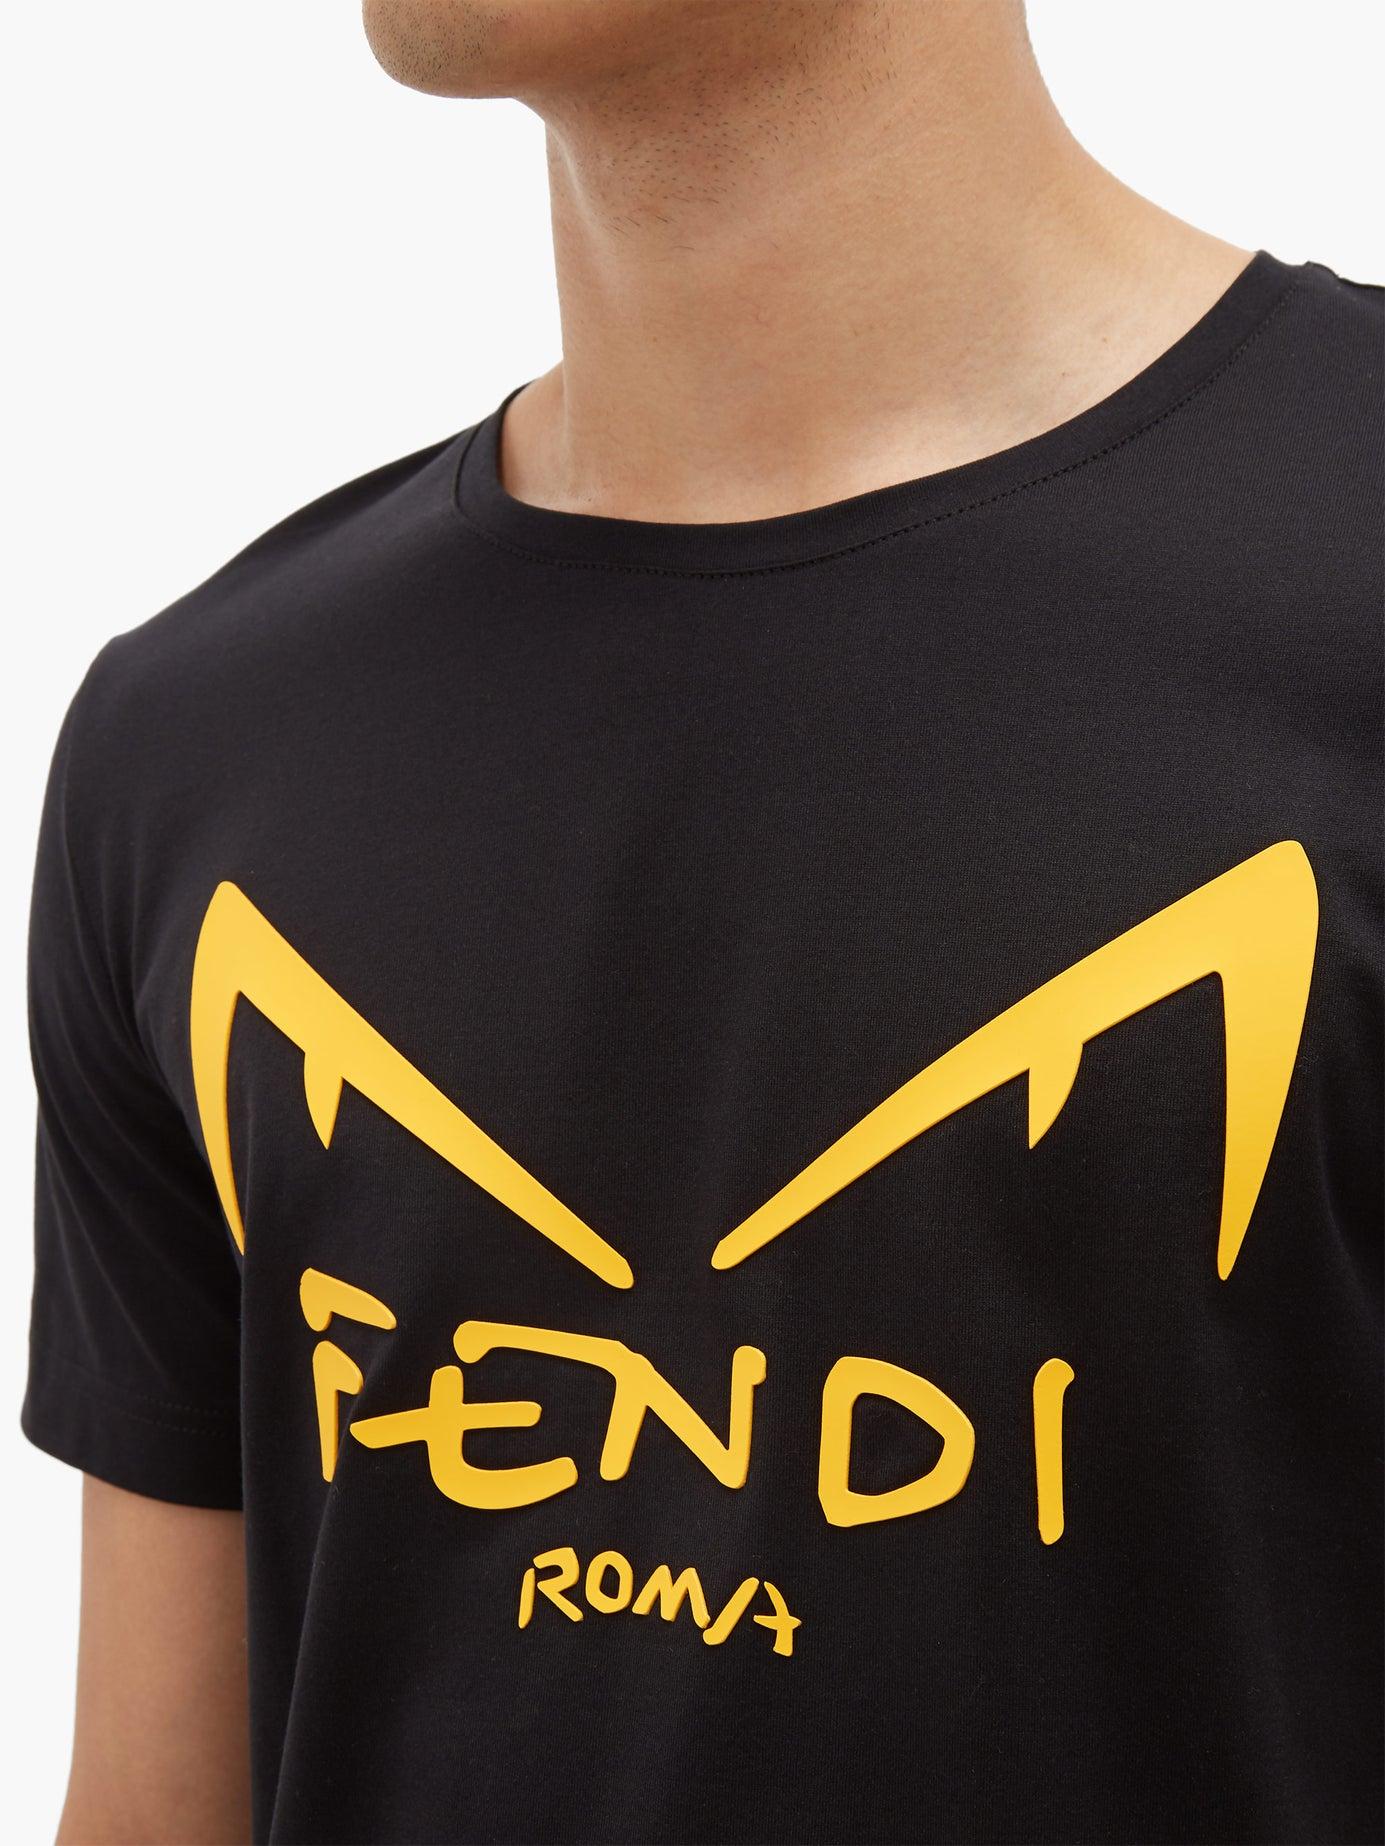 Fendi Eyes Logo Print Cotton T Shirt in Black/Yellow (Black) for Men - Lyst